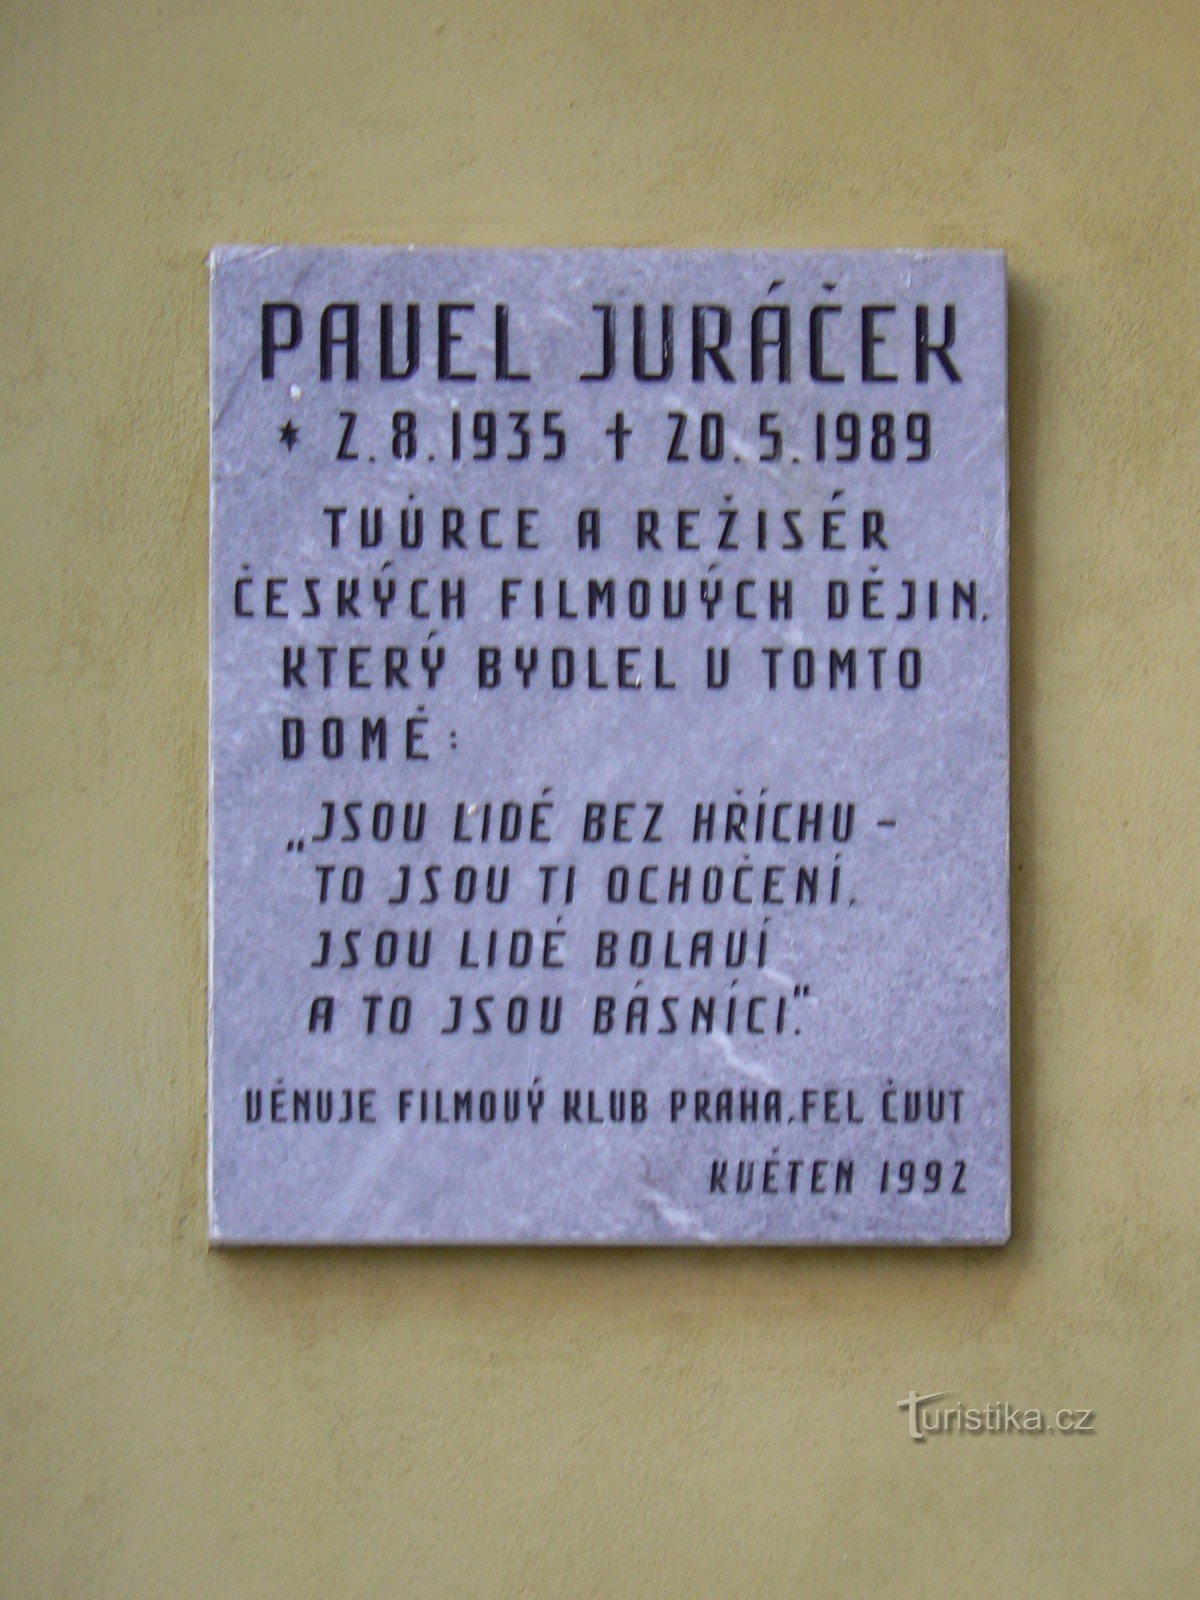 Tablica pamiątkowa Pavel Juráček